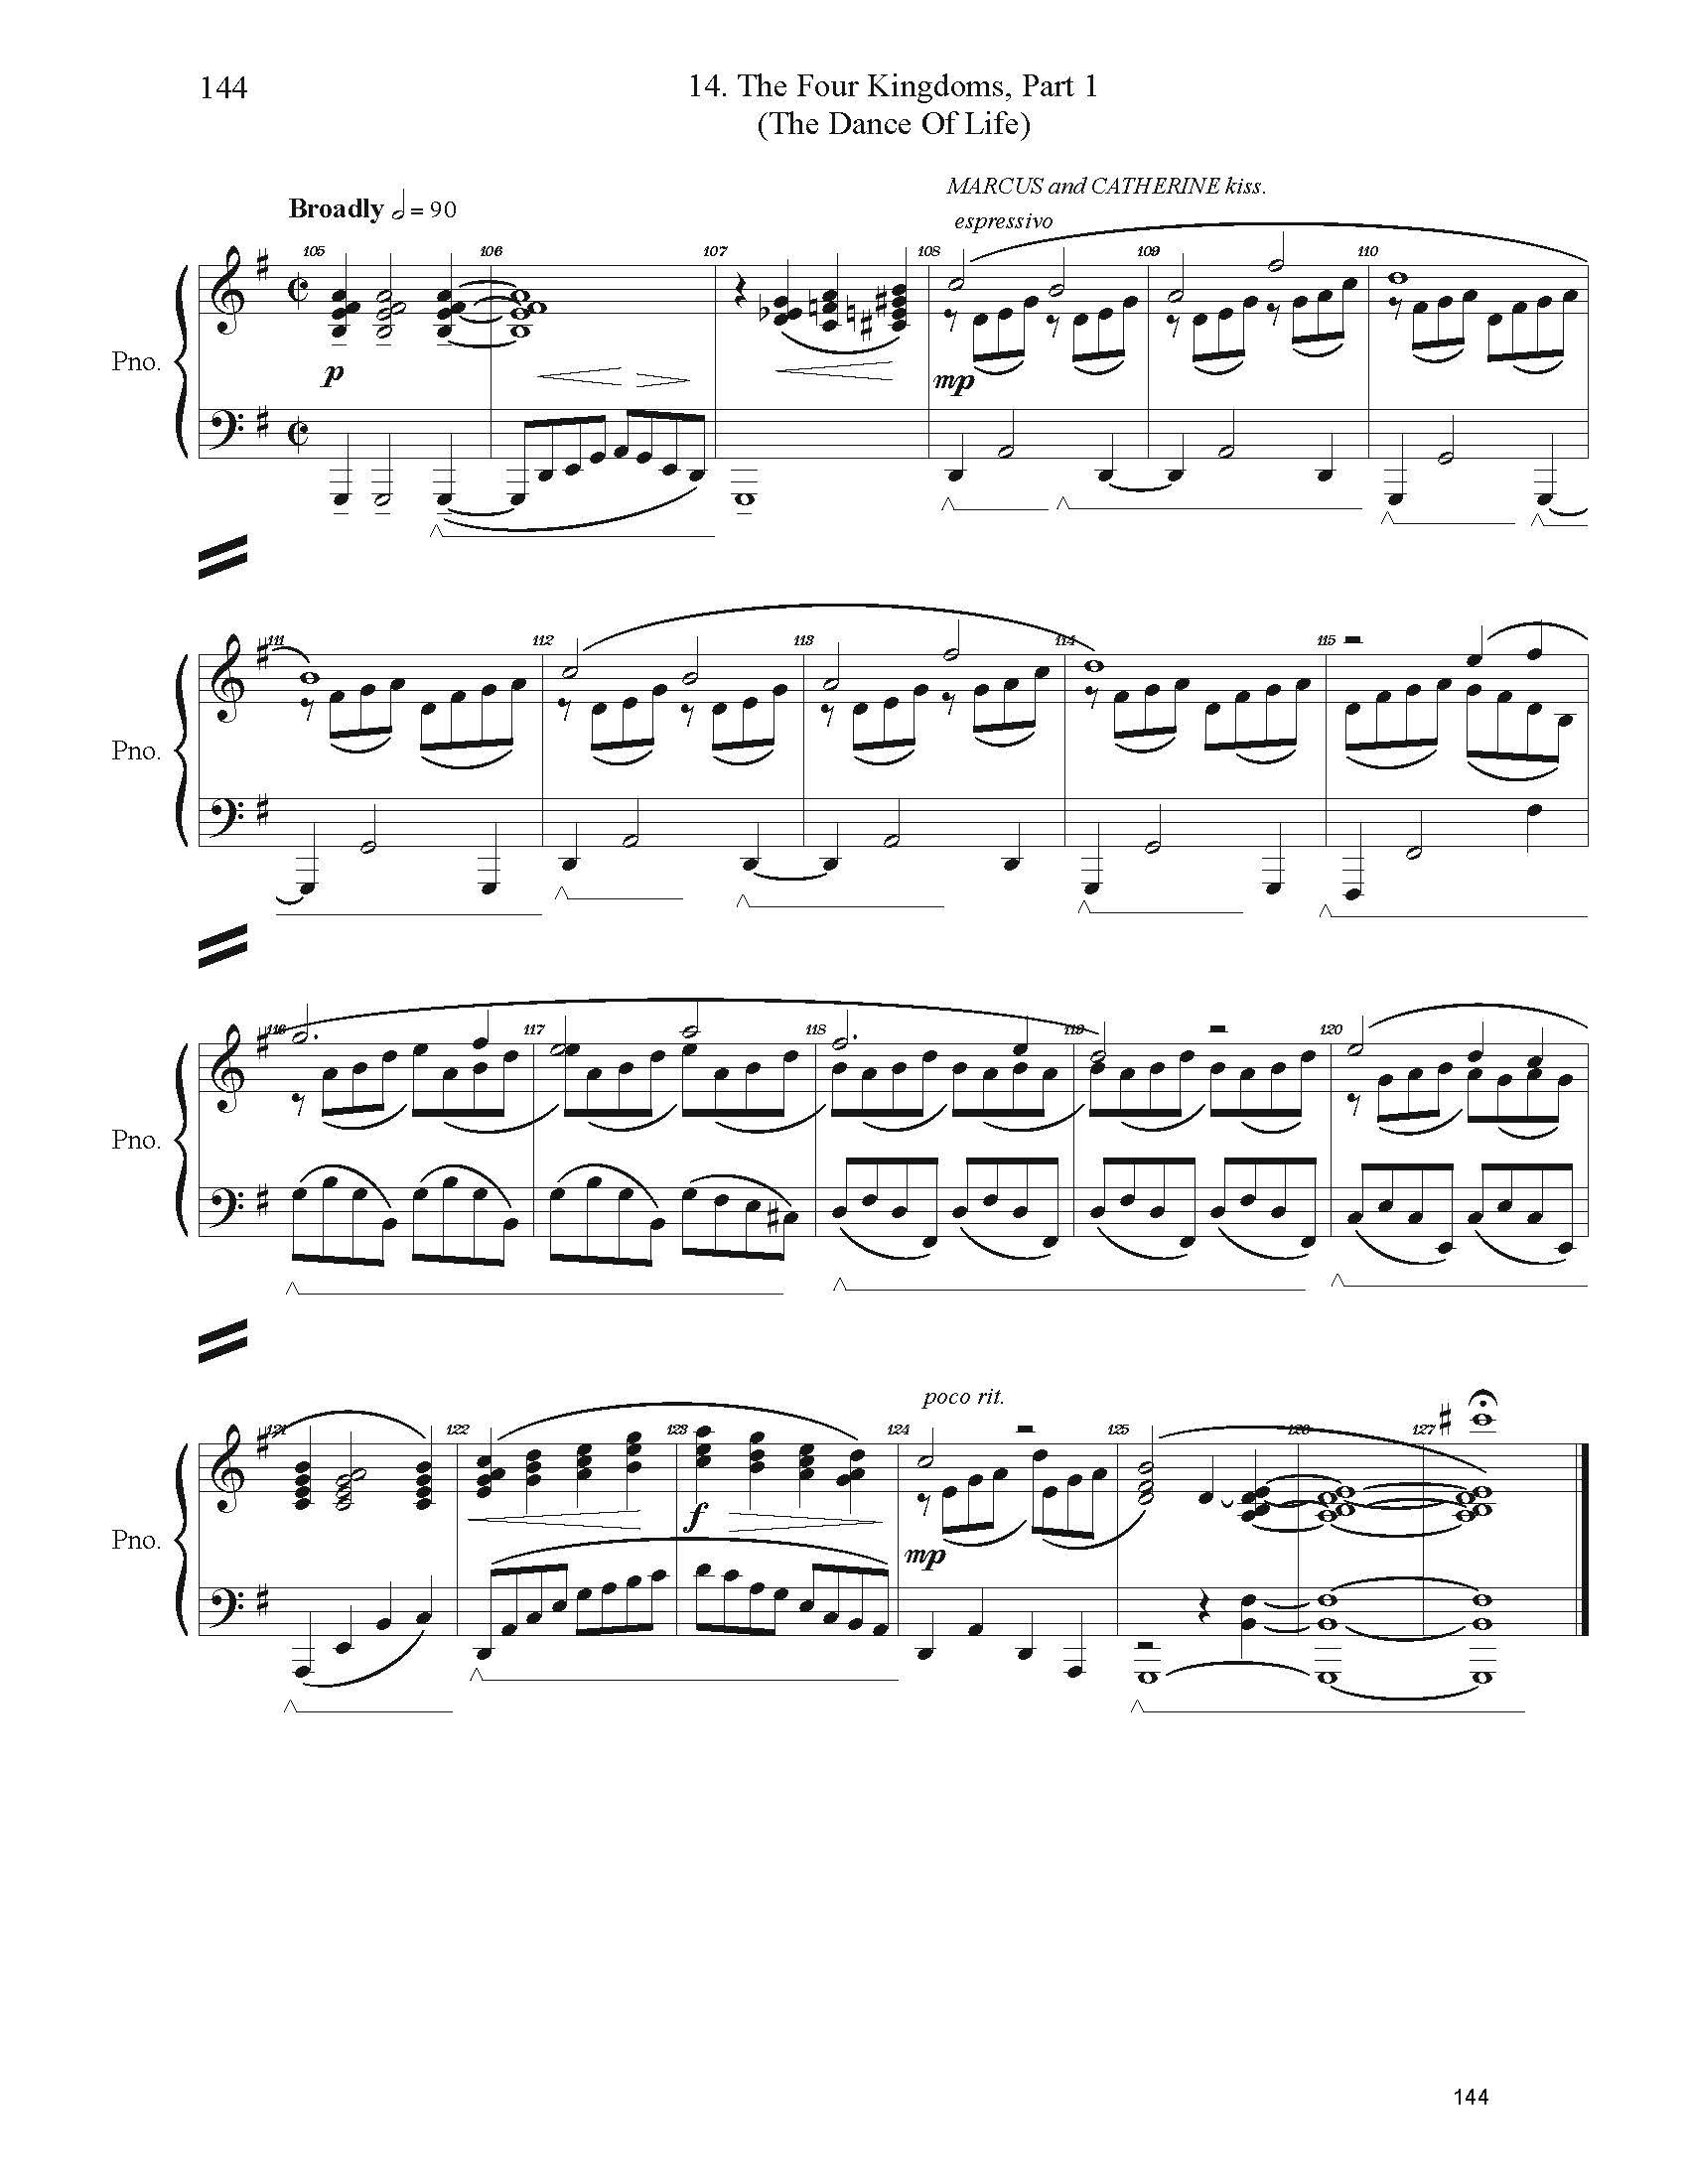 FULL PIANO VOCAL SCORE DRAFT 1 - Score_Page_144.jpg